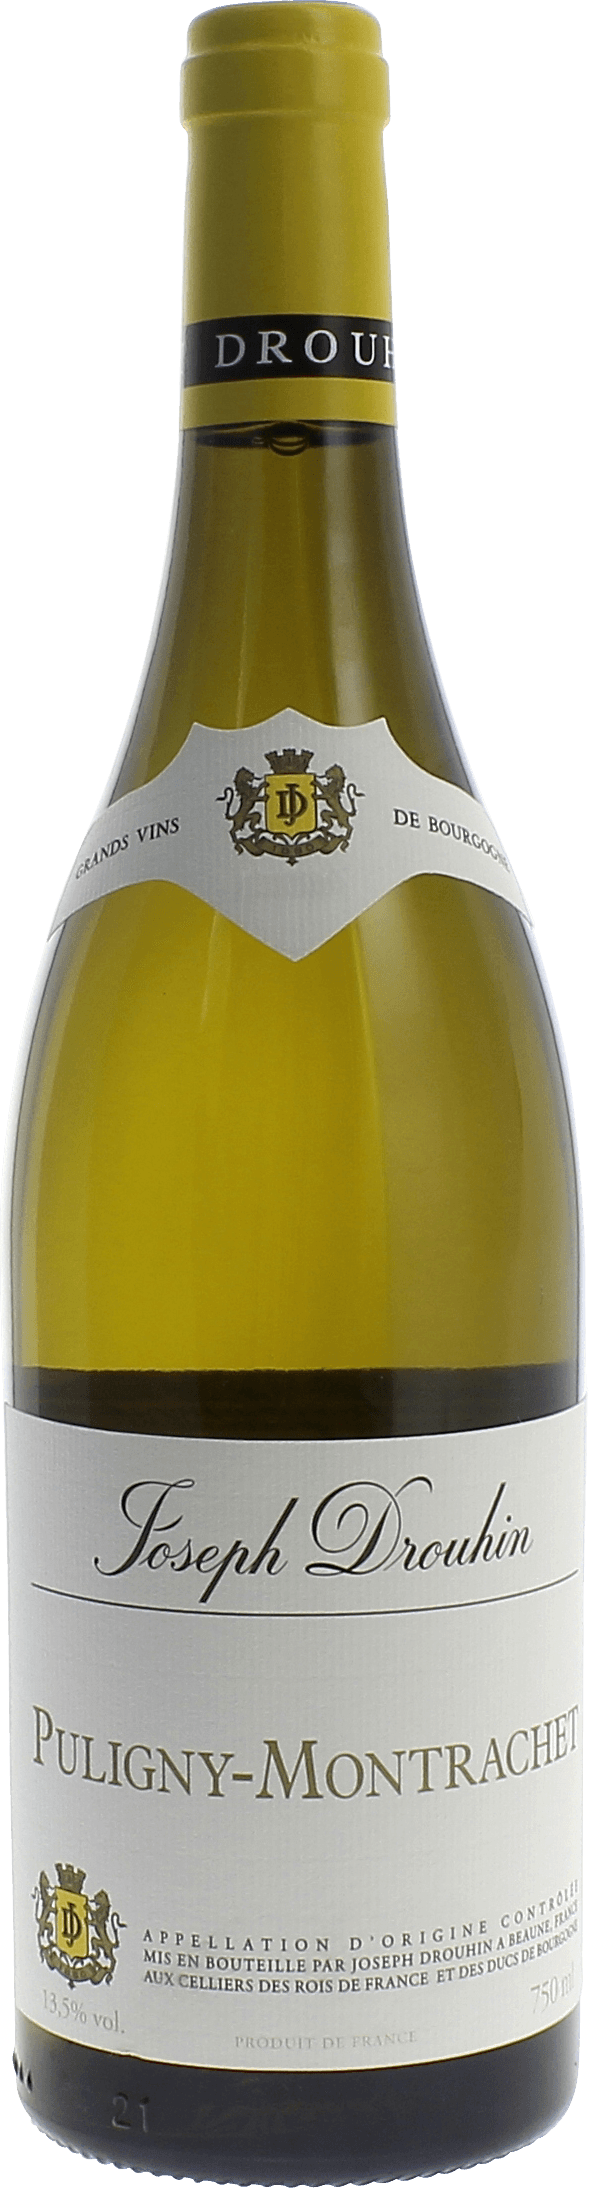 Puligny montrachet 2017 Domaine Joseph DROUHIN, Bourgogne blanc